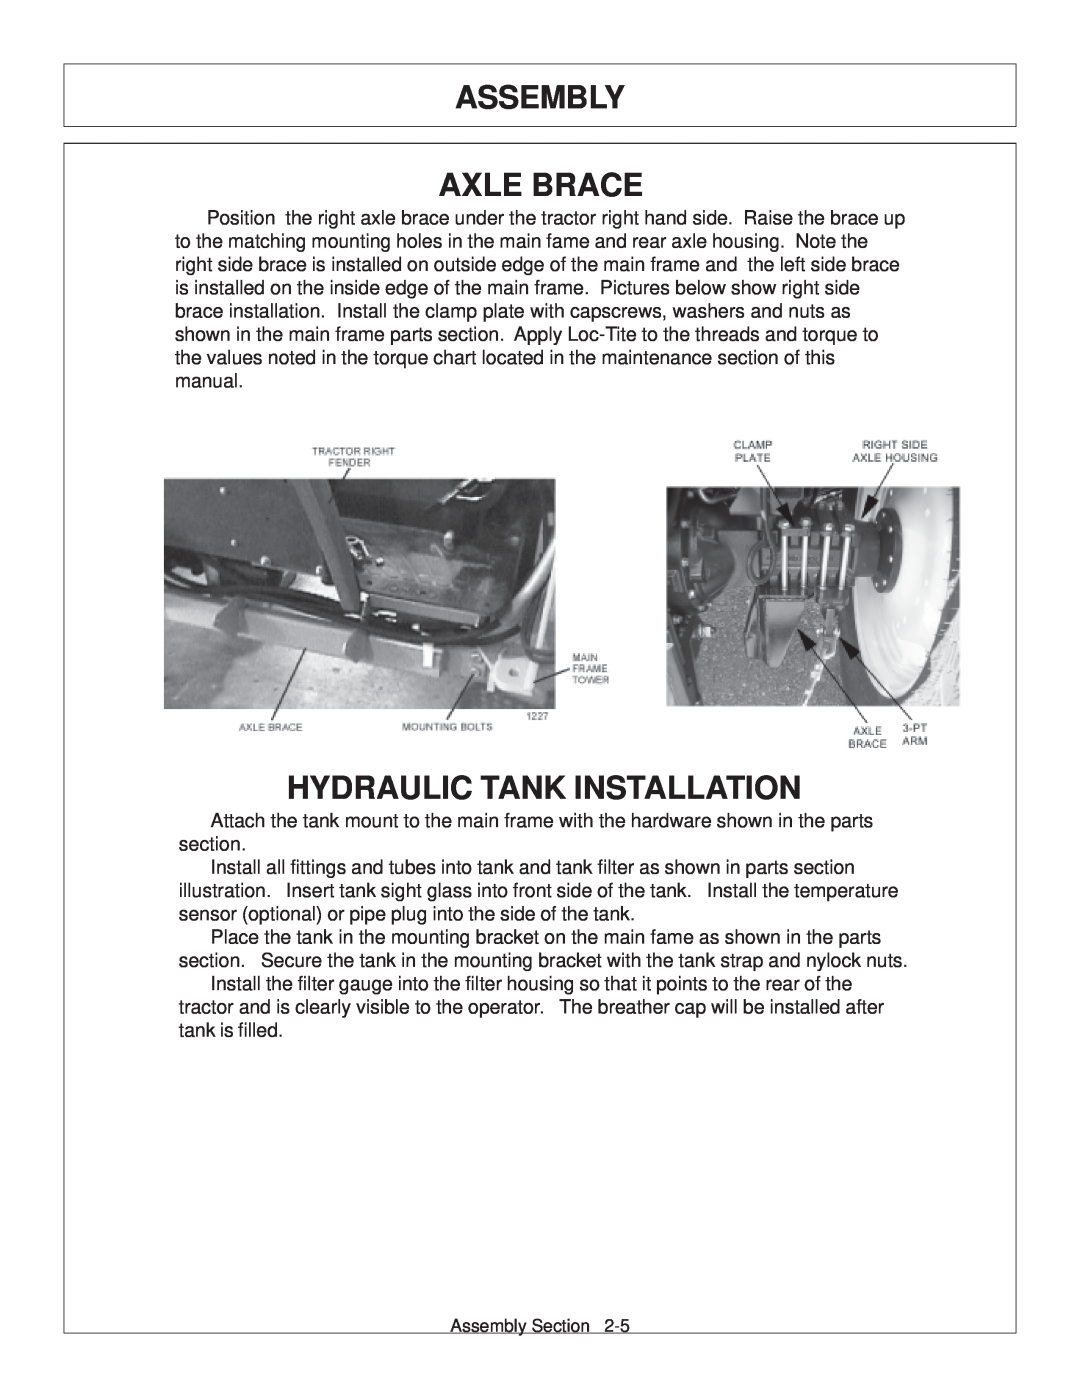 Tiger JD 5093E, JD 5083E, JD 5101E manual Assembly Axle Brace, Hydraulic Tank Installation 